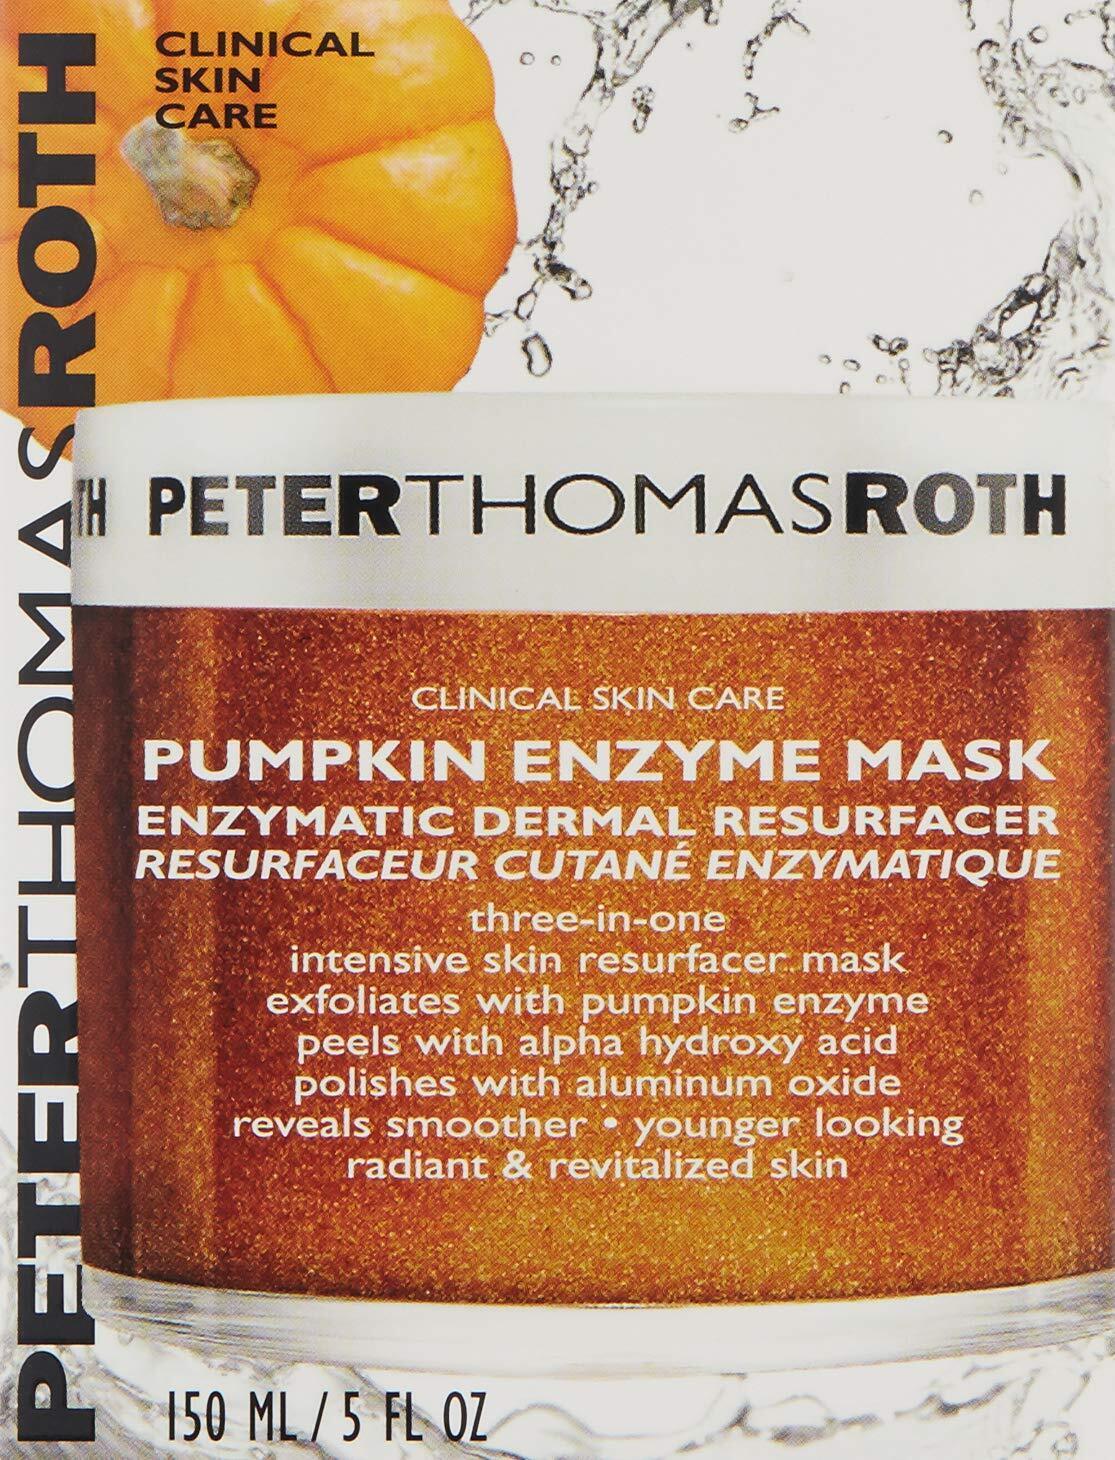 Peter Thomas Roth Pumpkin Enzyme Face Mask 5 oz - $59.99